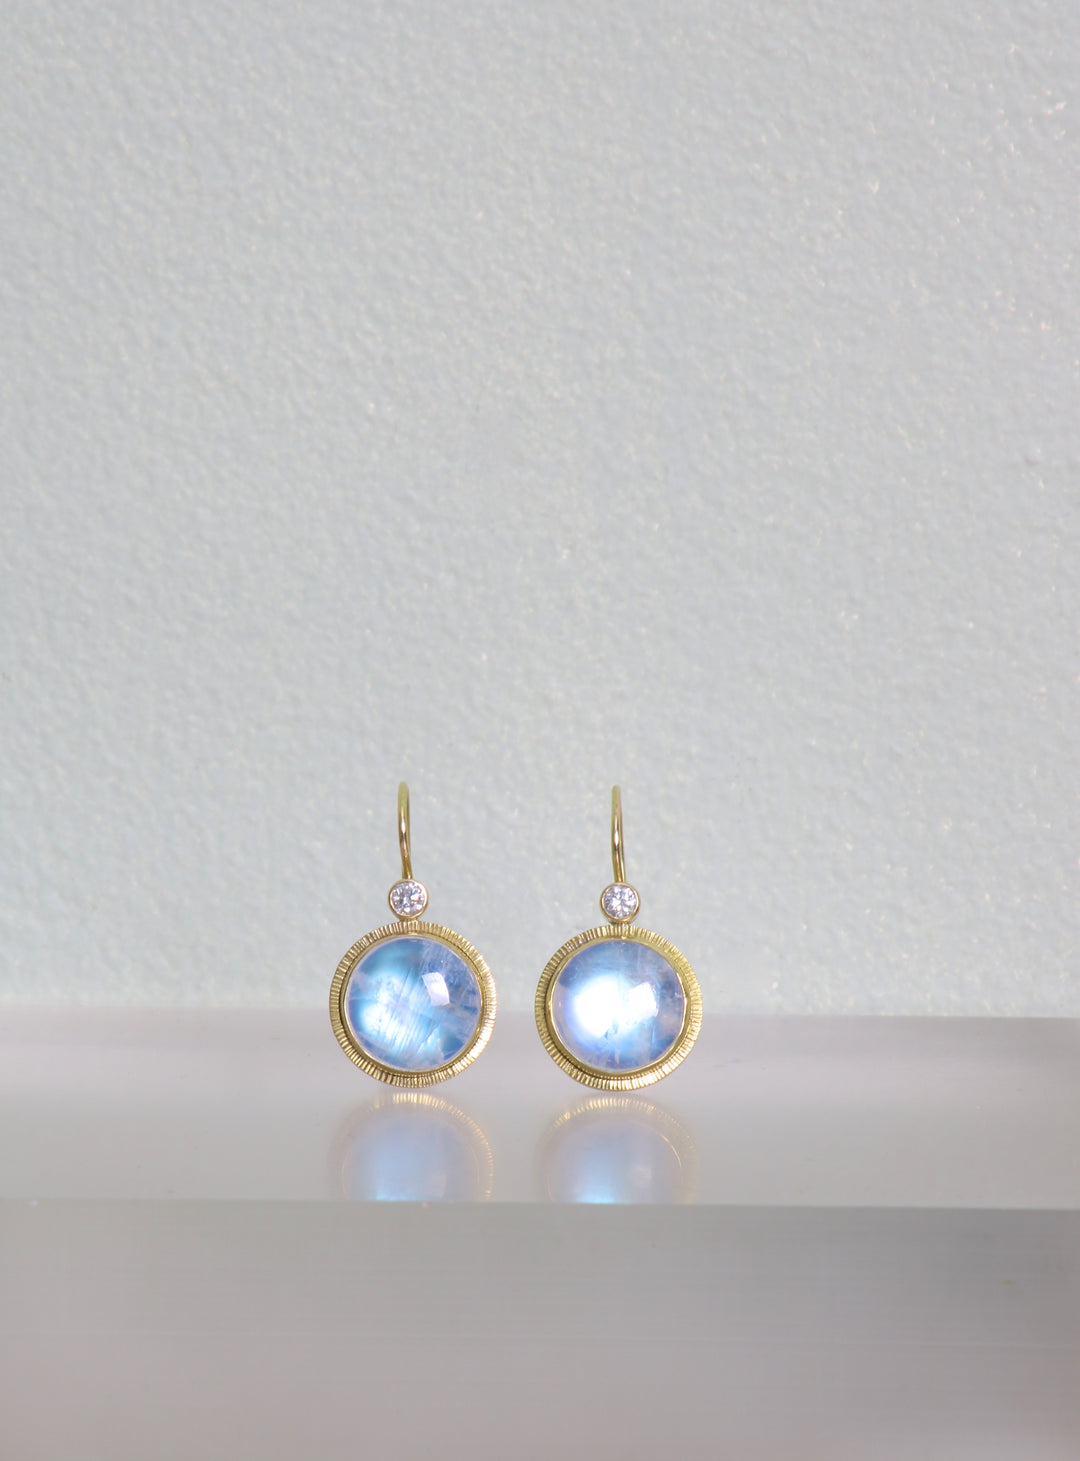 Moonstone and Diamond Earrings (09161)